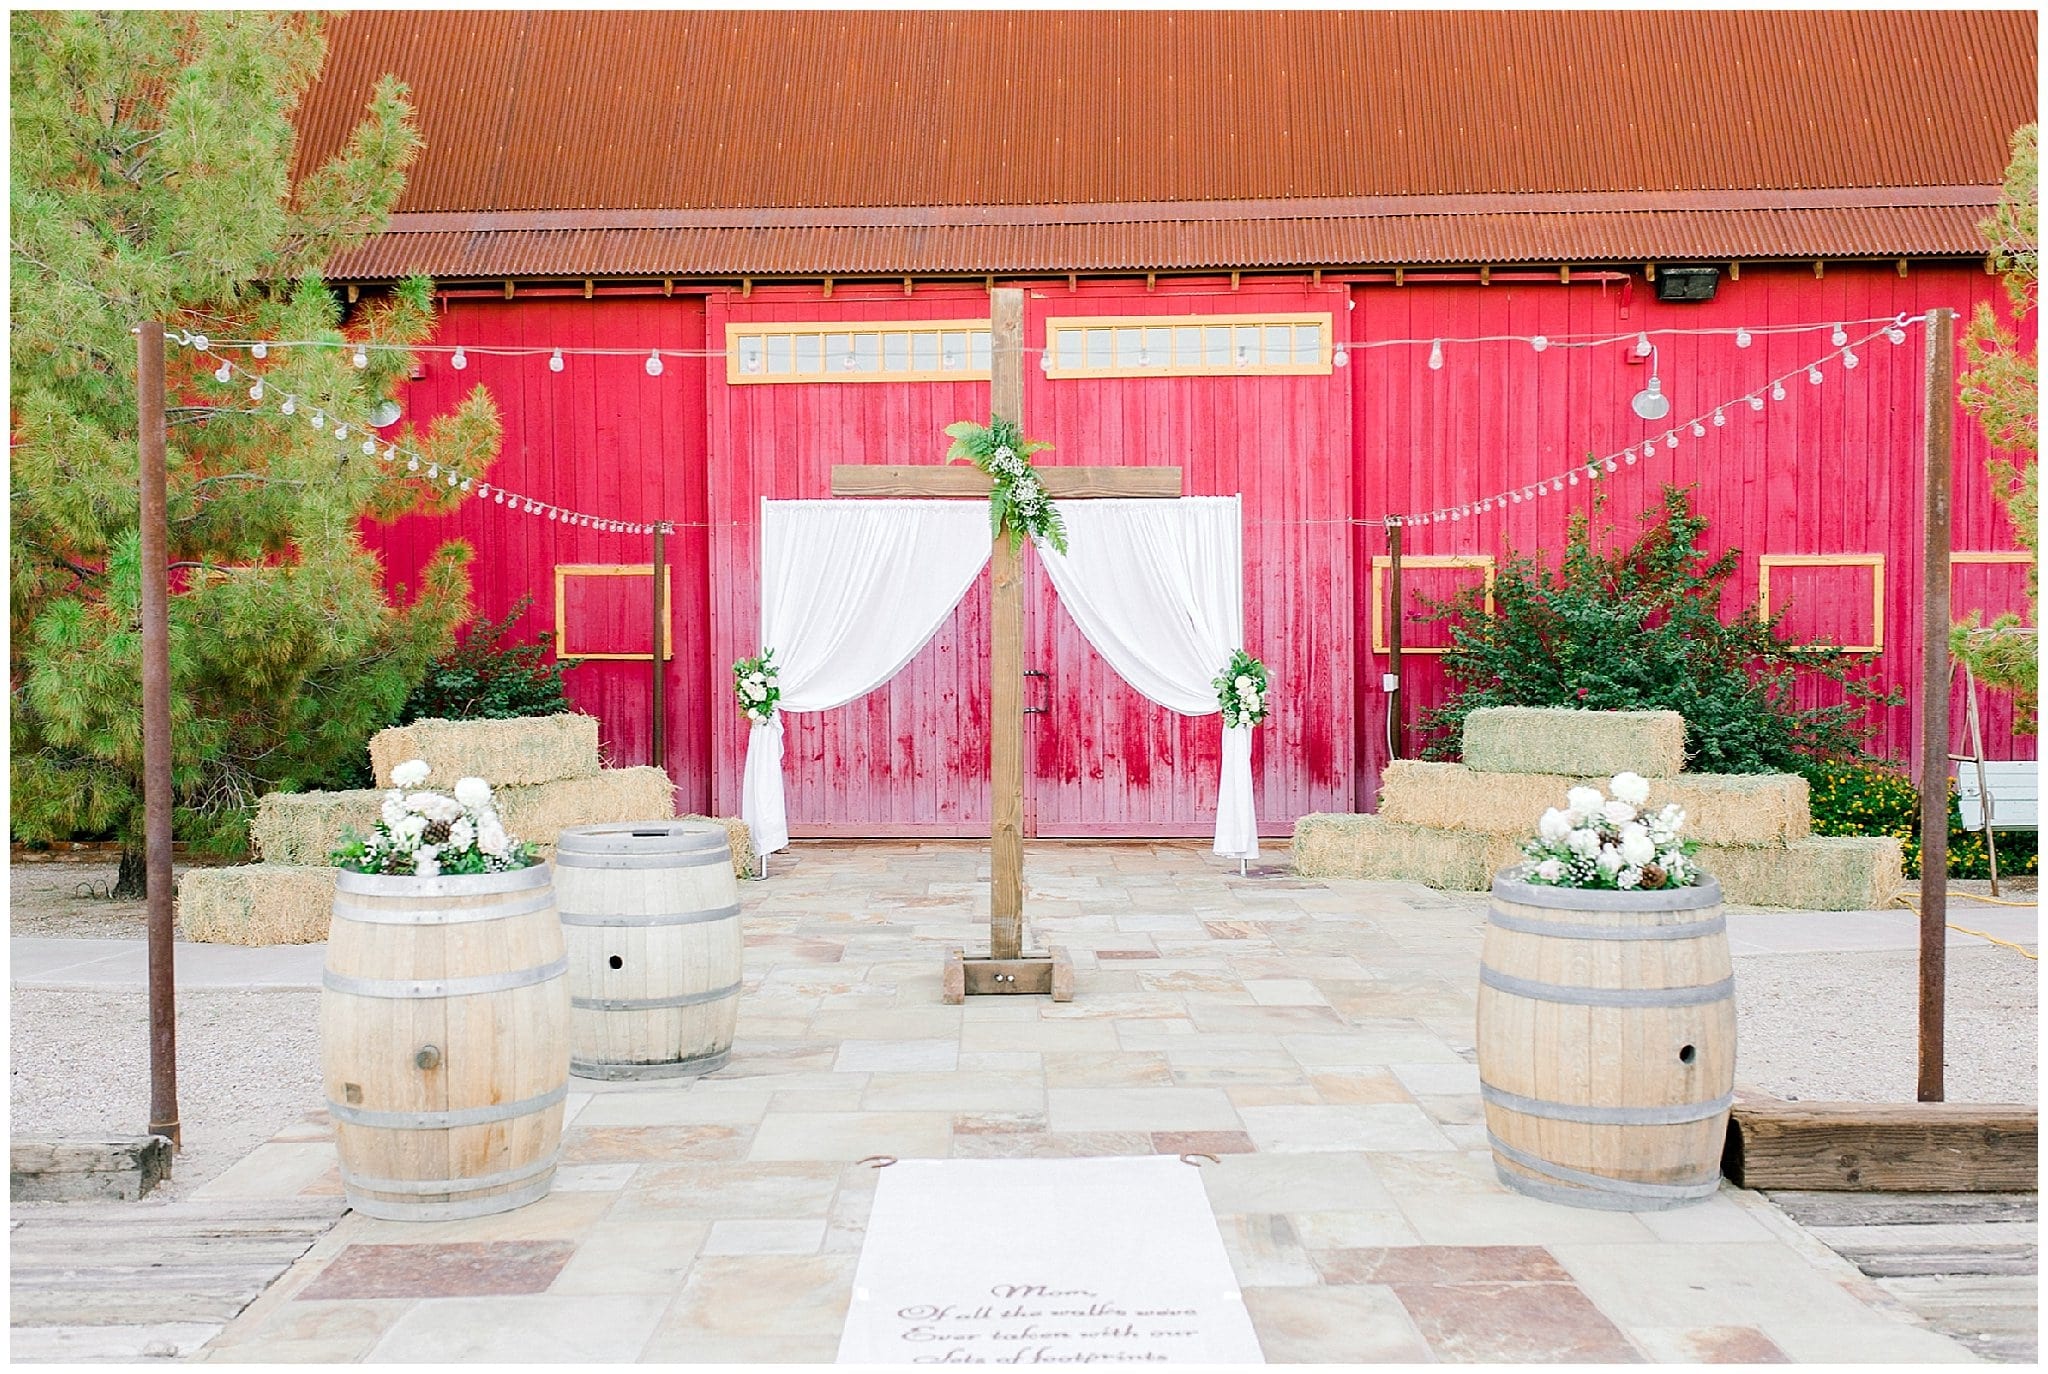 Windmill Winery Barn Wedding, Country Wedding, Outdoor Wedding, Country themed wedding, Tractors, John Deere Wedding, Big Red Barn Wedding, Ceremony Decor